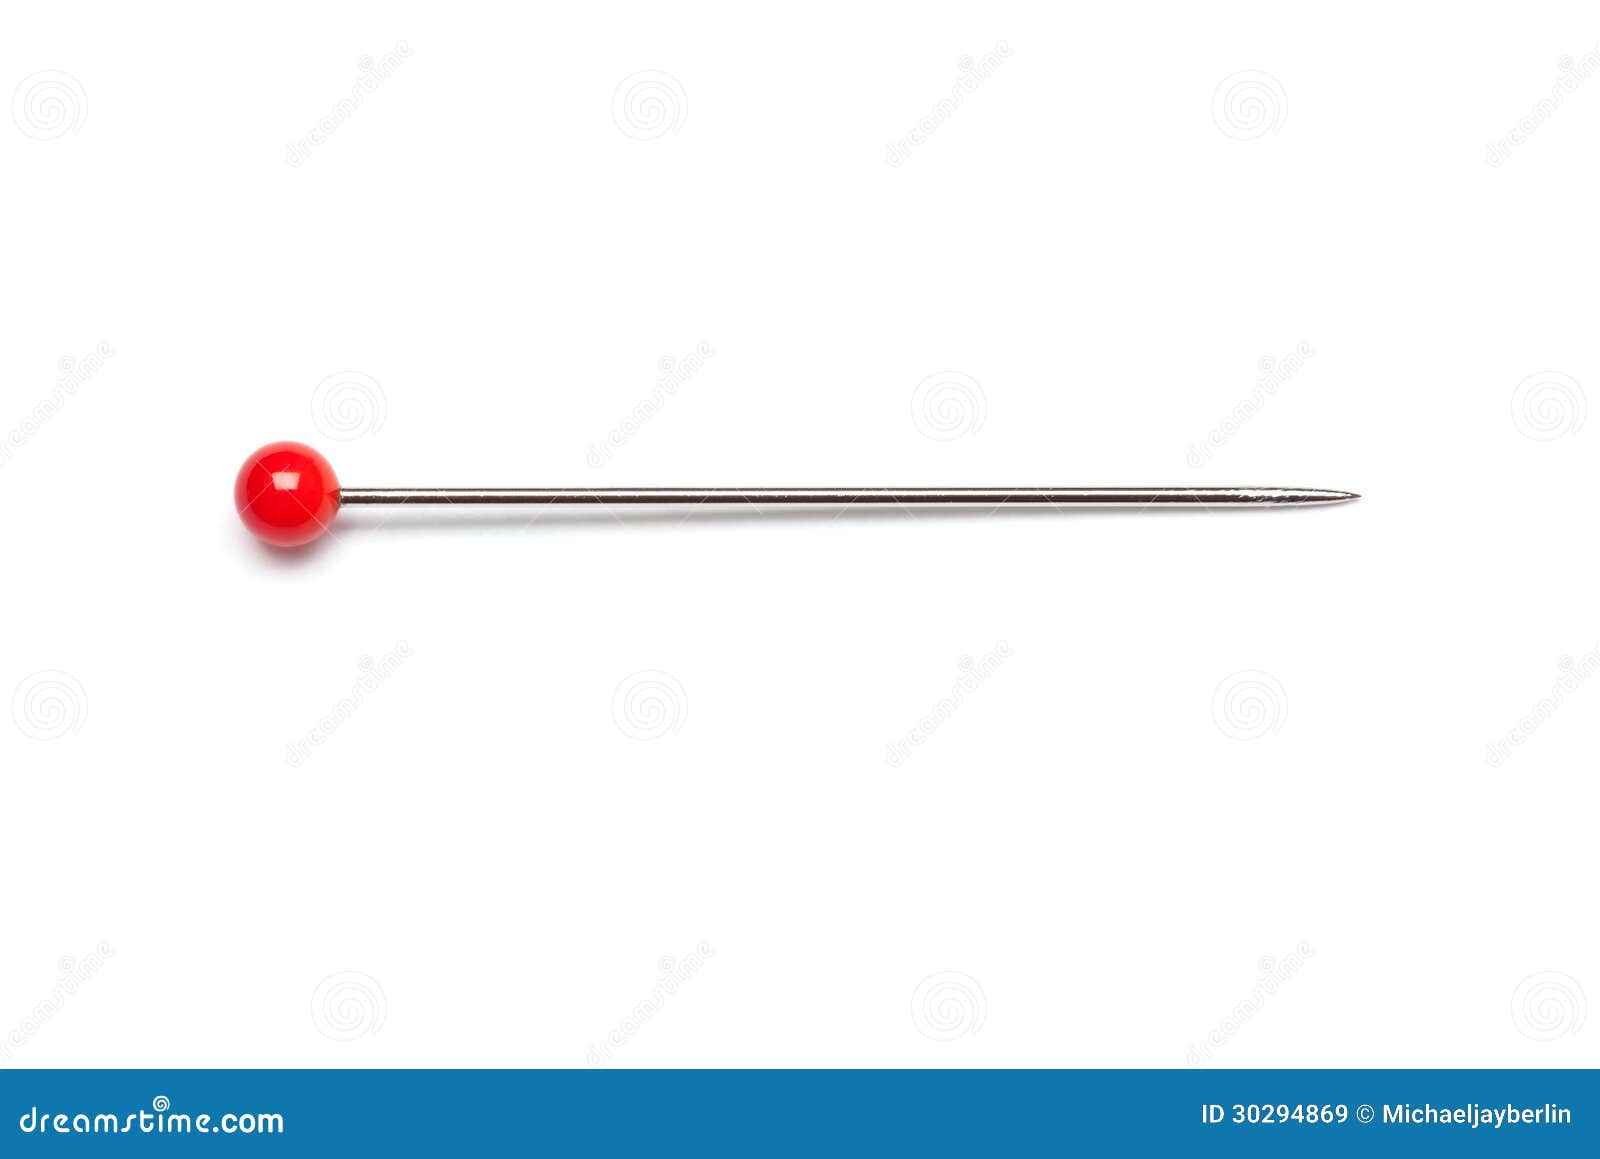 needle-pin-red-head-white-background-30294869.jpg